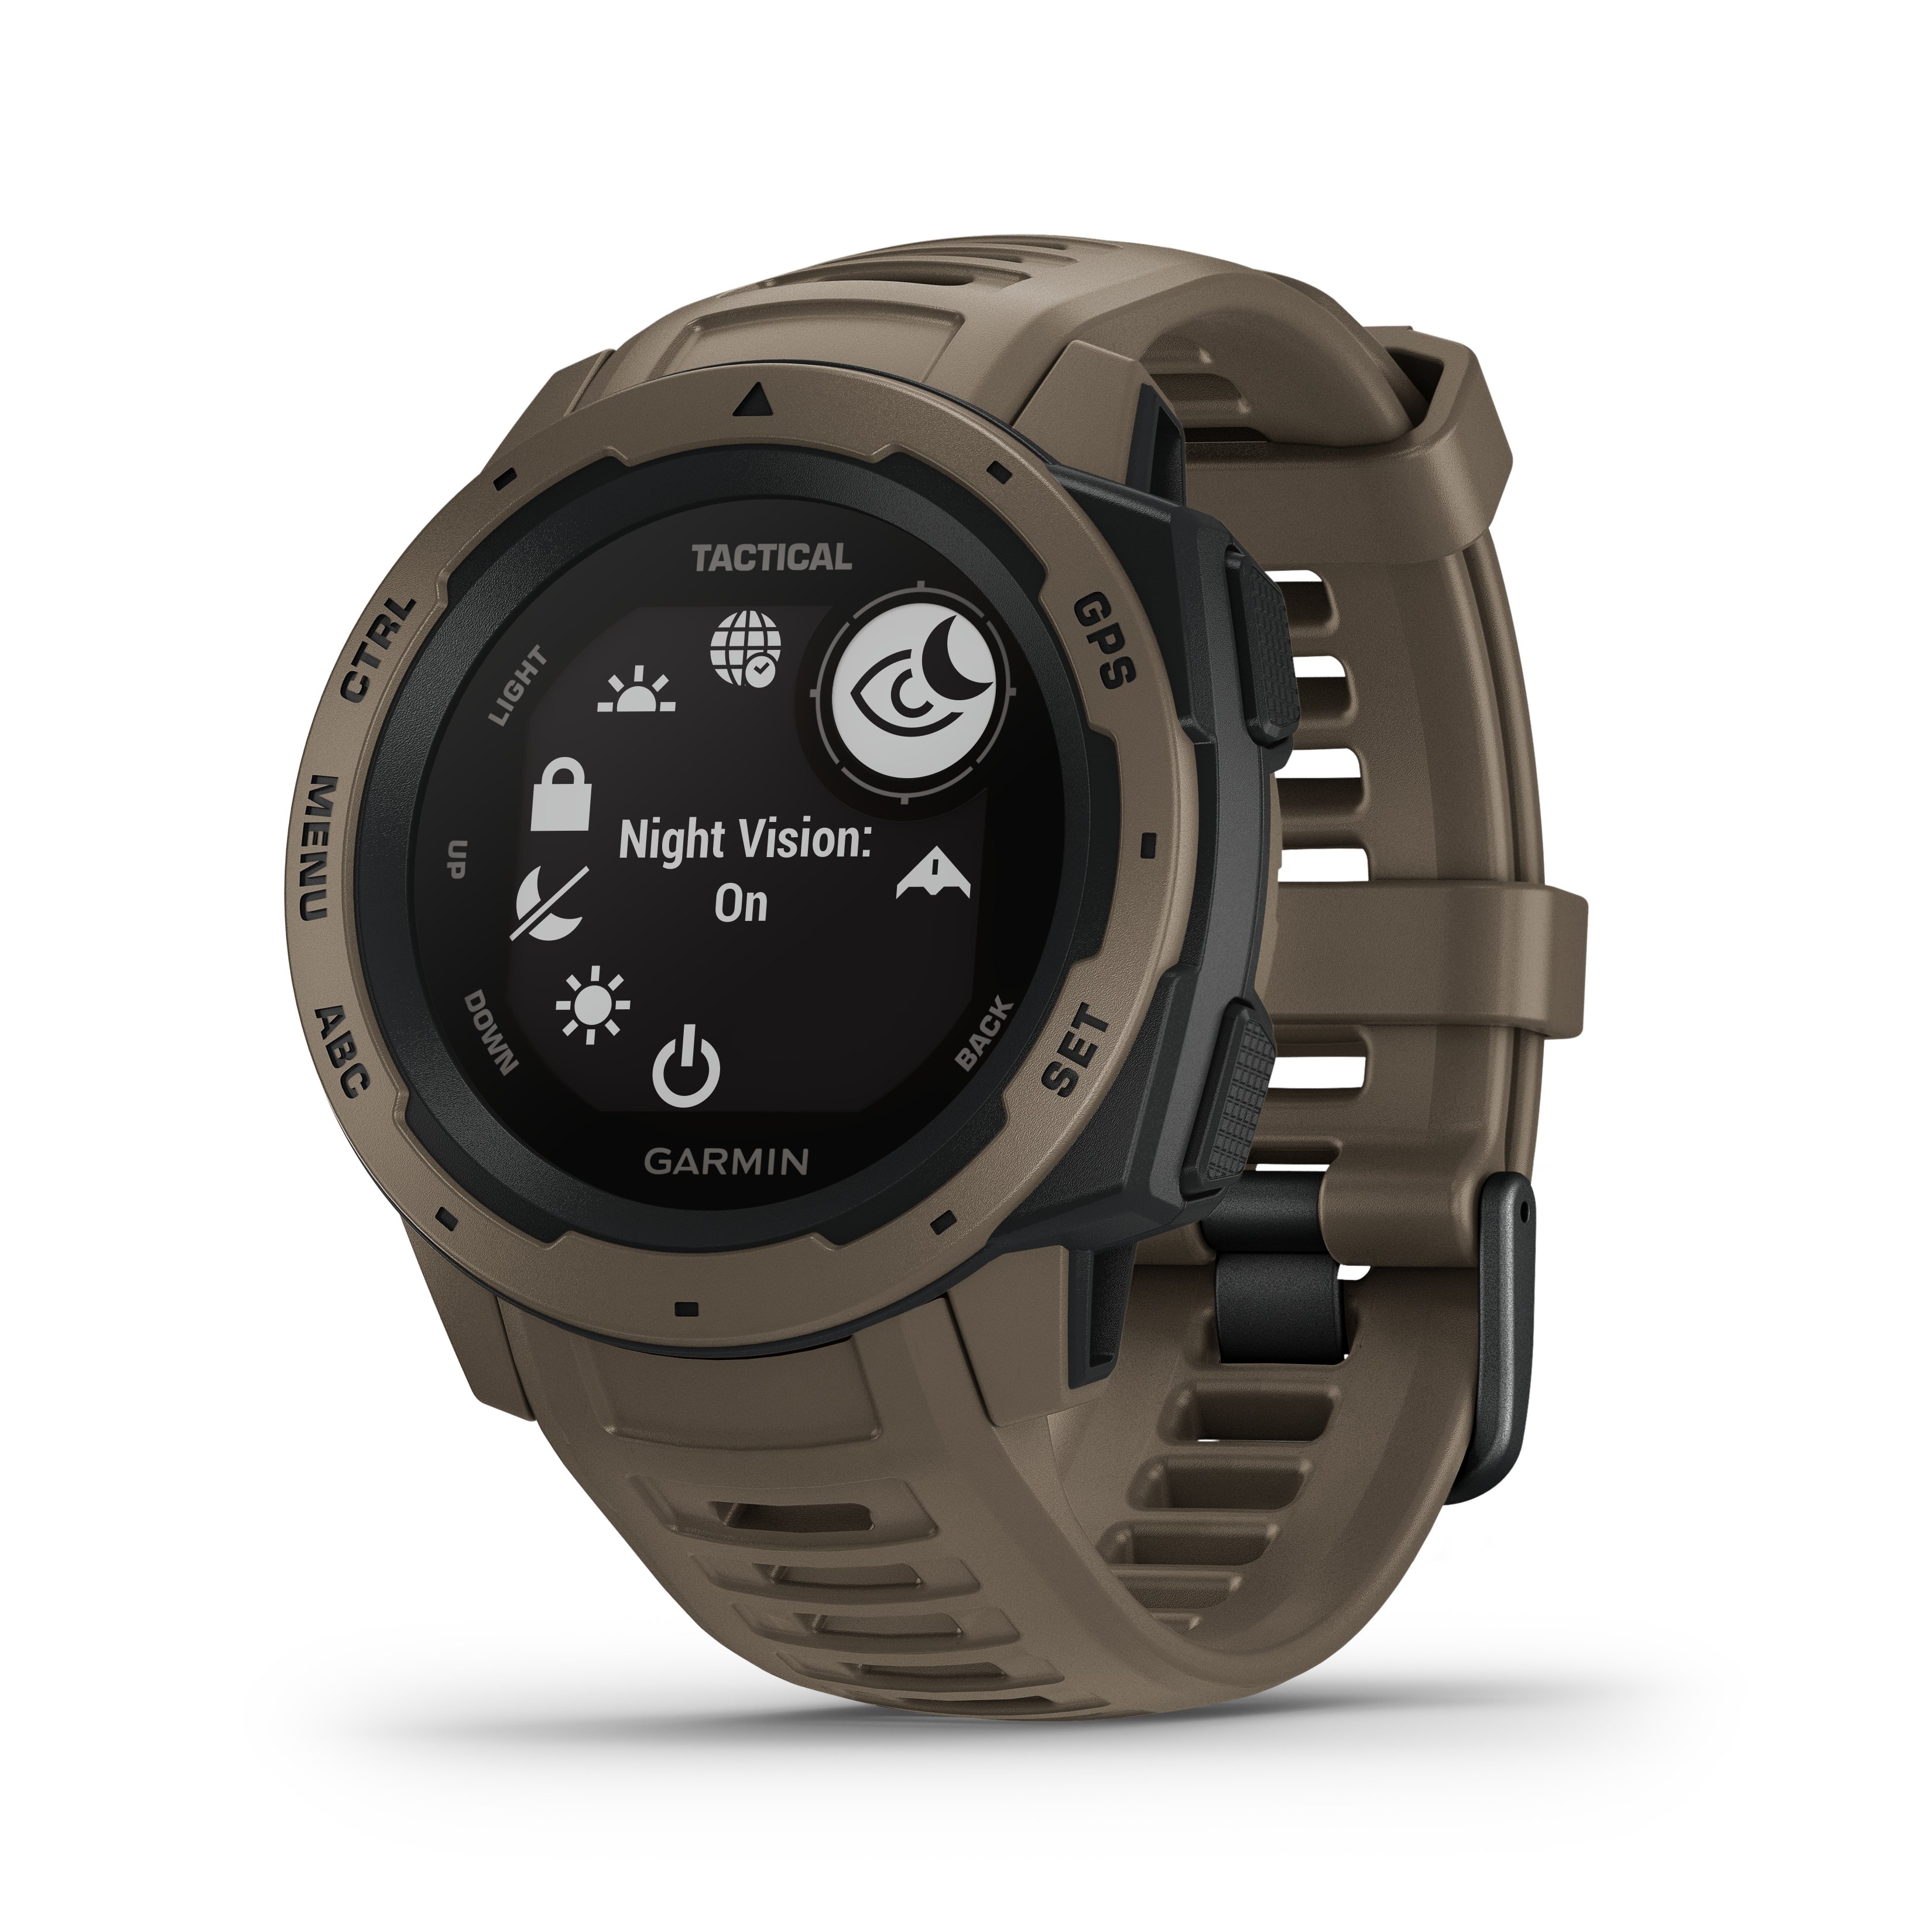 Garmin umumkan peluncuran jam tangan GPS, Instinct Tactical Edition